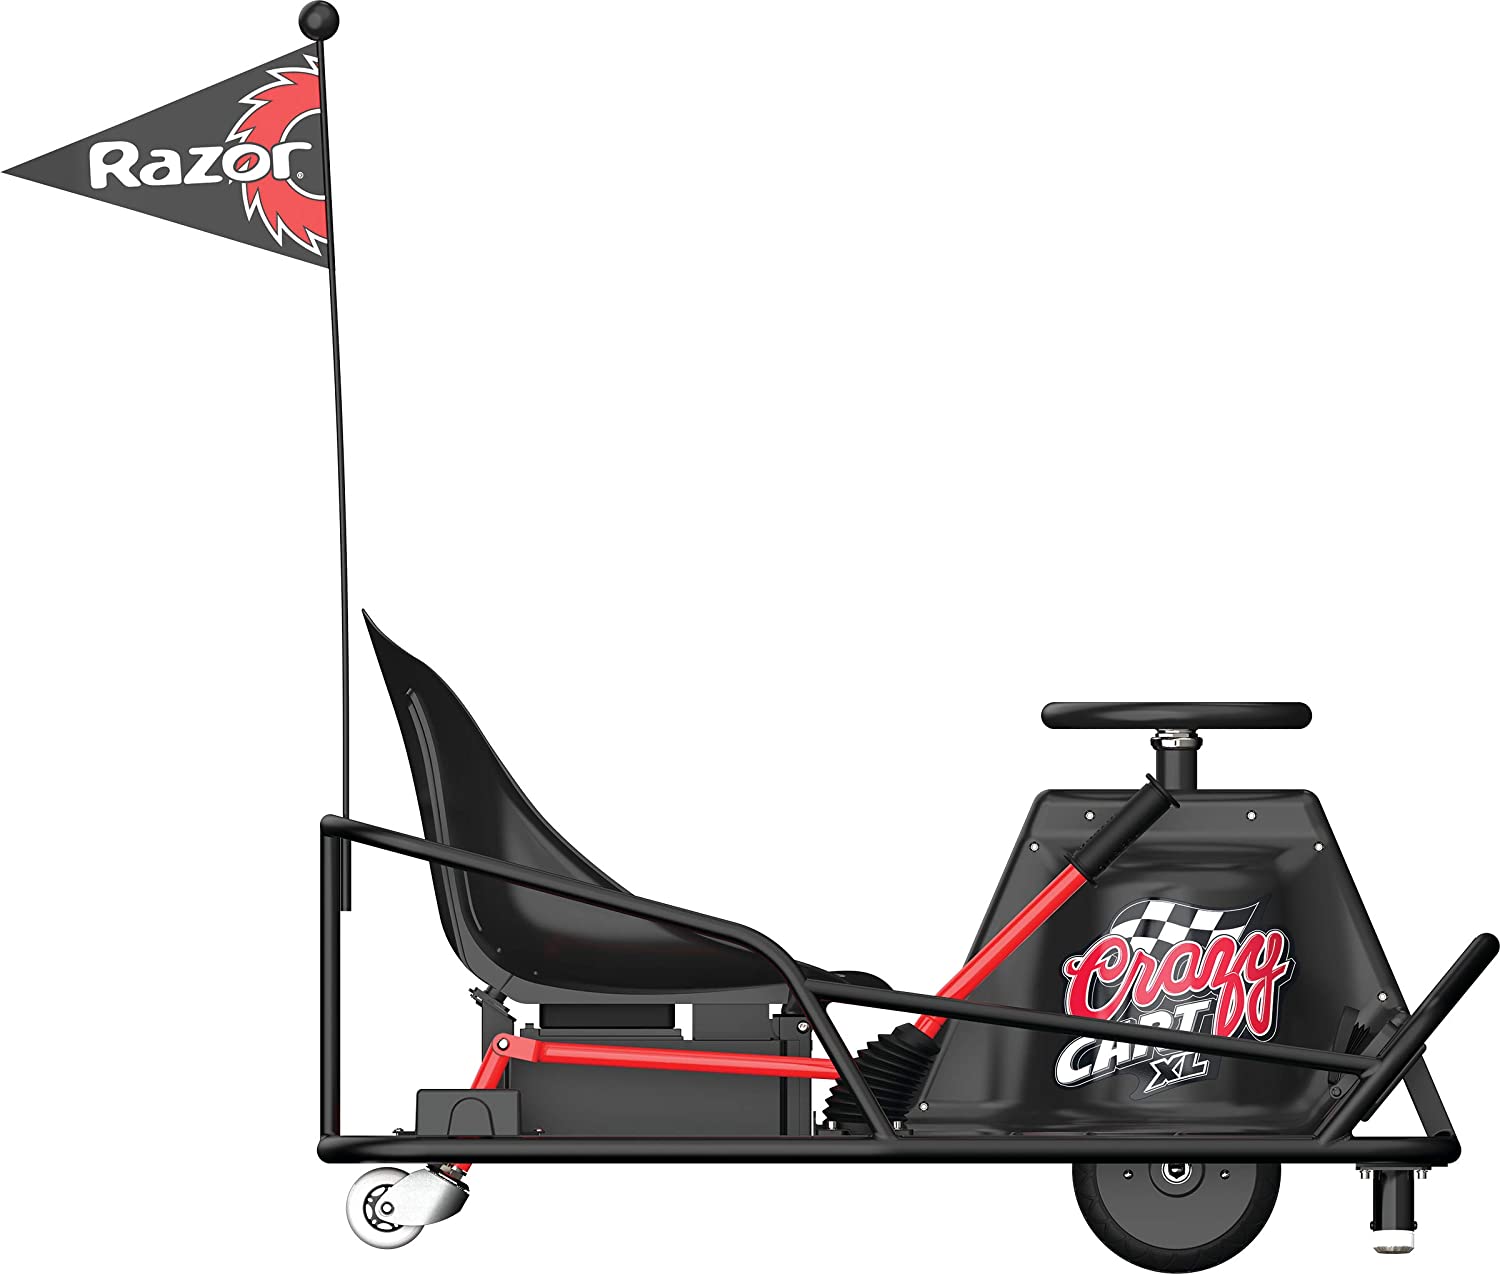 Razor, Razor Crazy Cart XL Up To 40 Minute Run Time 14 MPH Electric Drifting Go Kart Black New